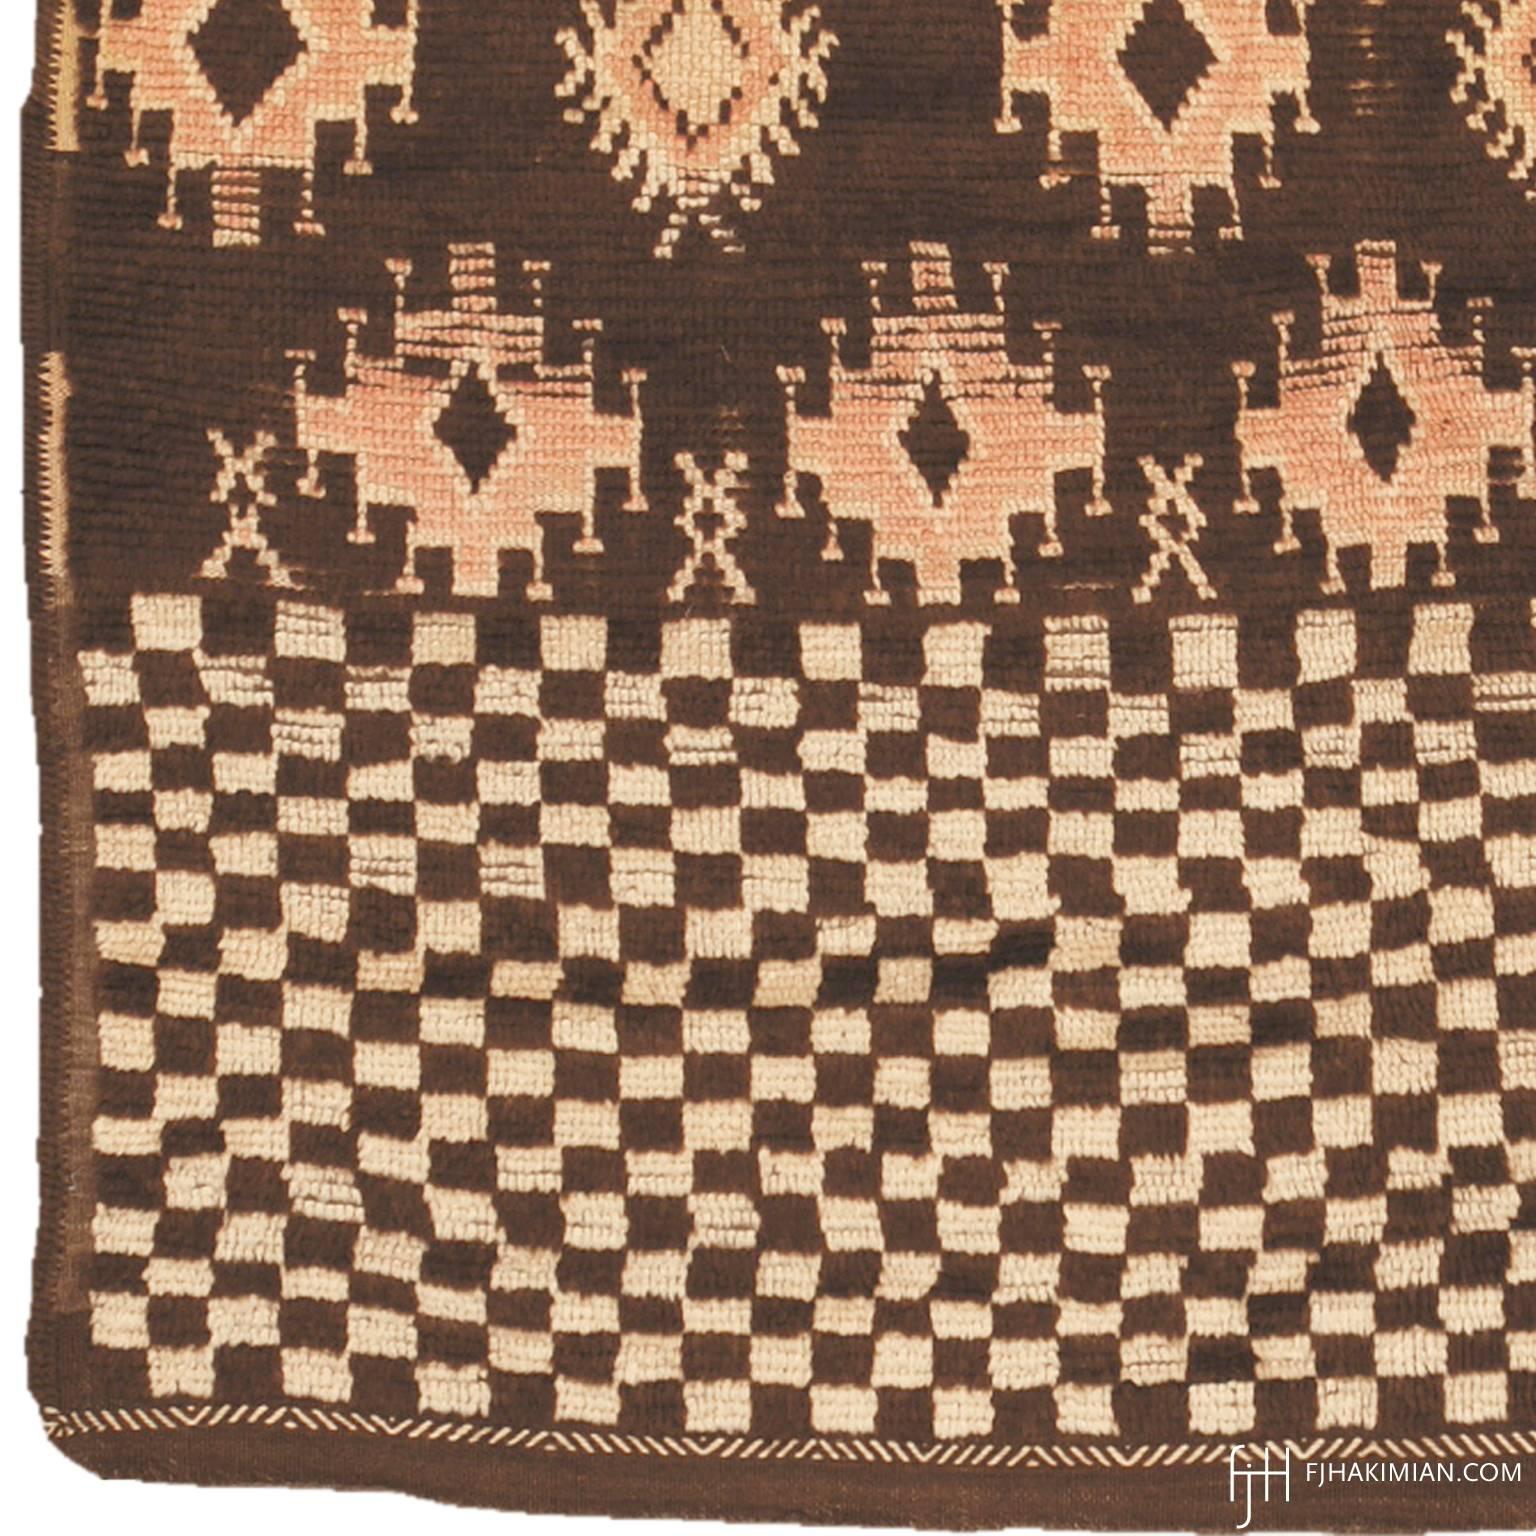 Mid-20th century Moroccan Tazenakht carpet
Morocco, circa mid-20th century.
Handwoven.